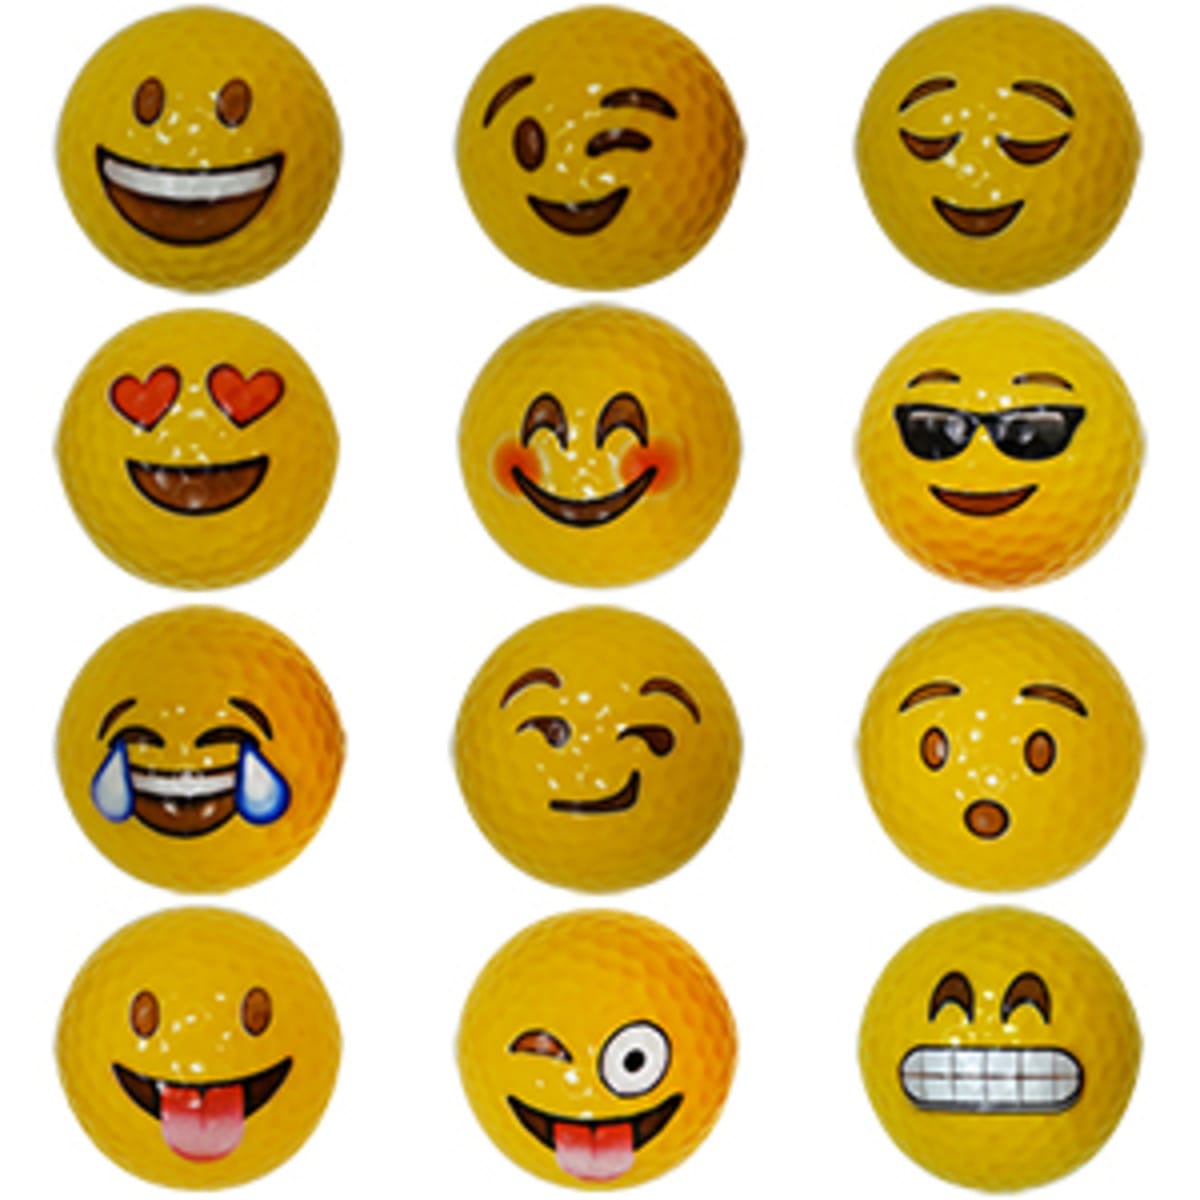 Emoji novelty golf balls - assorted